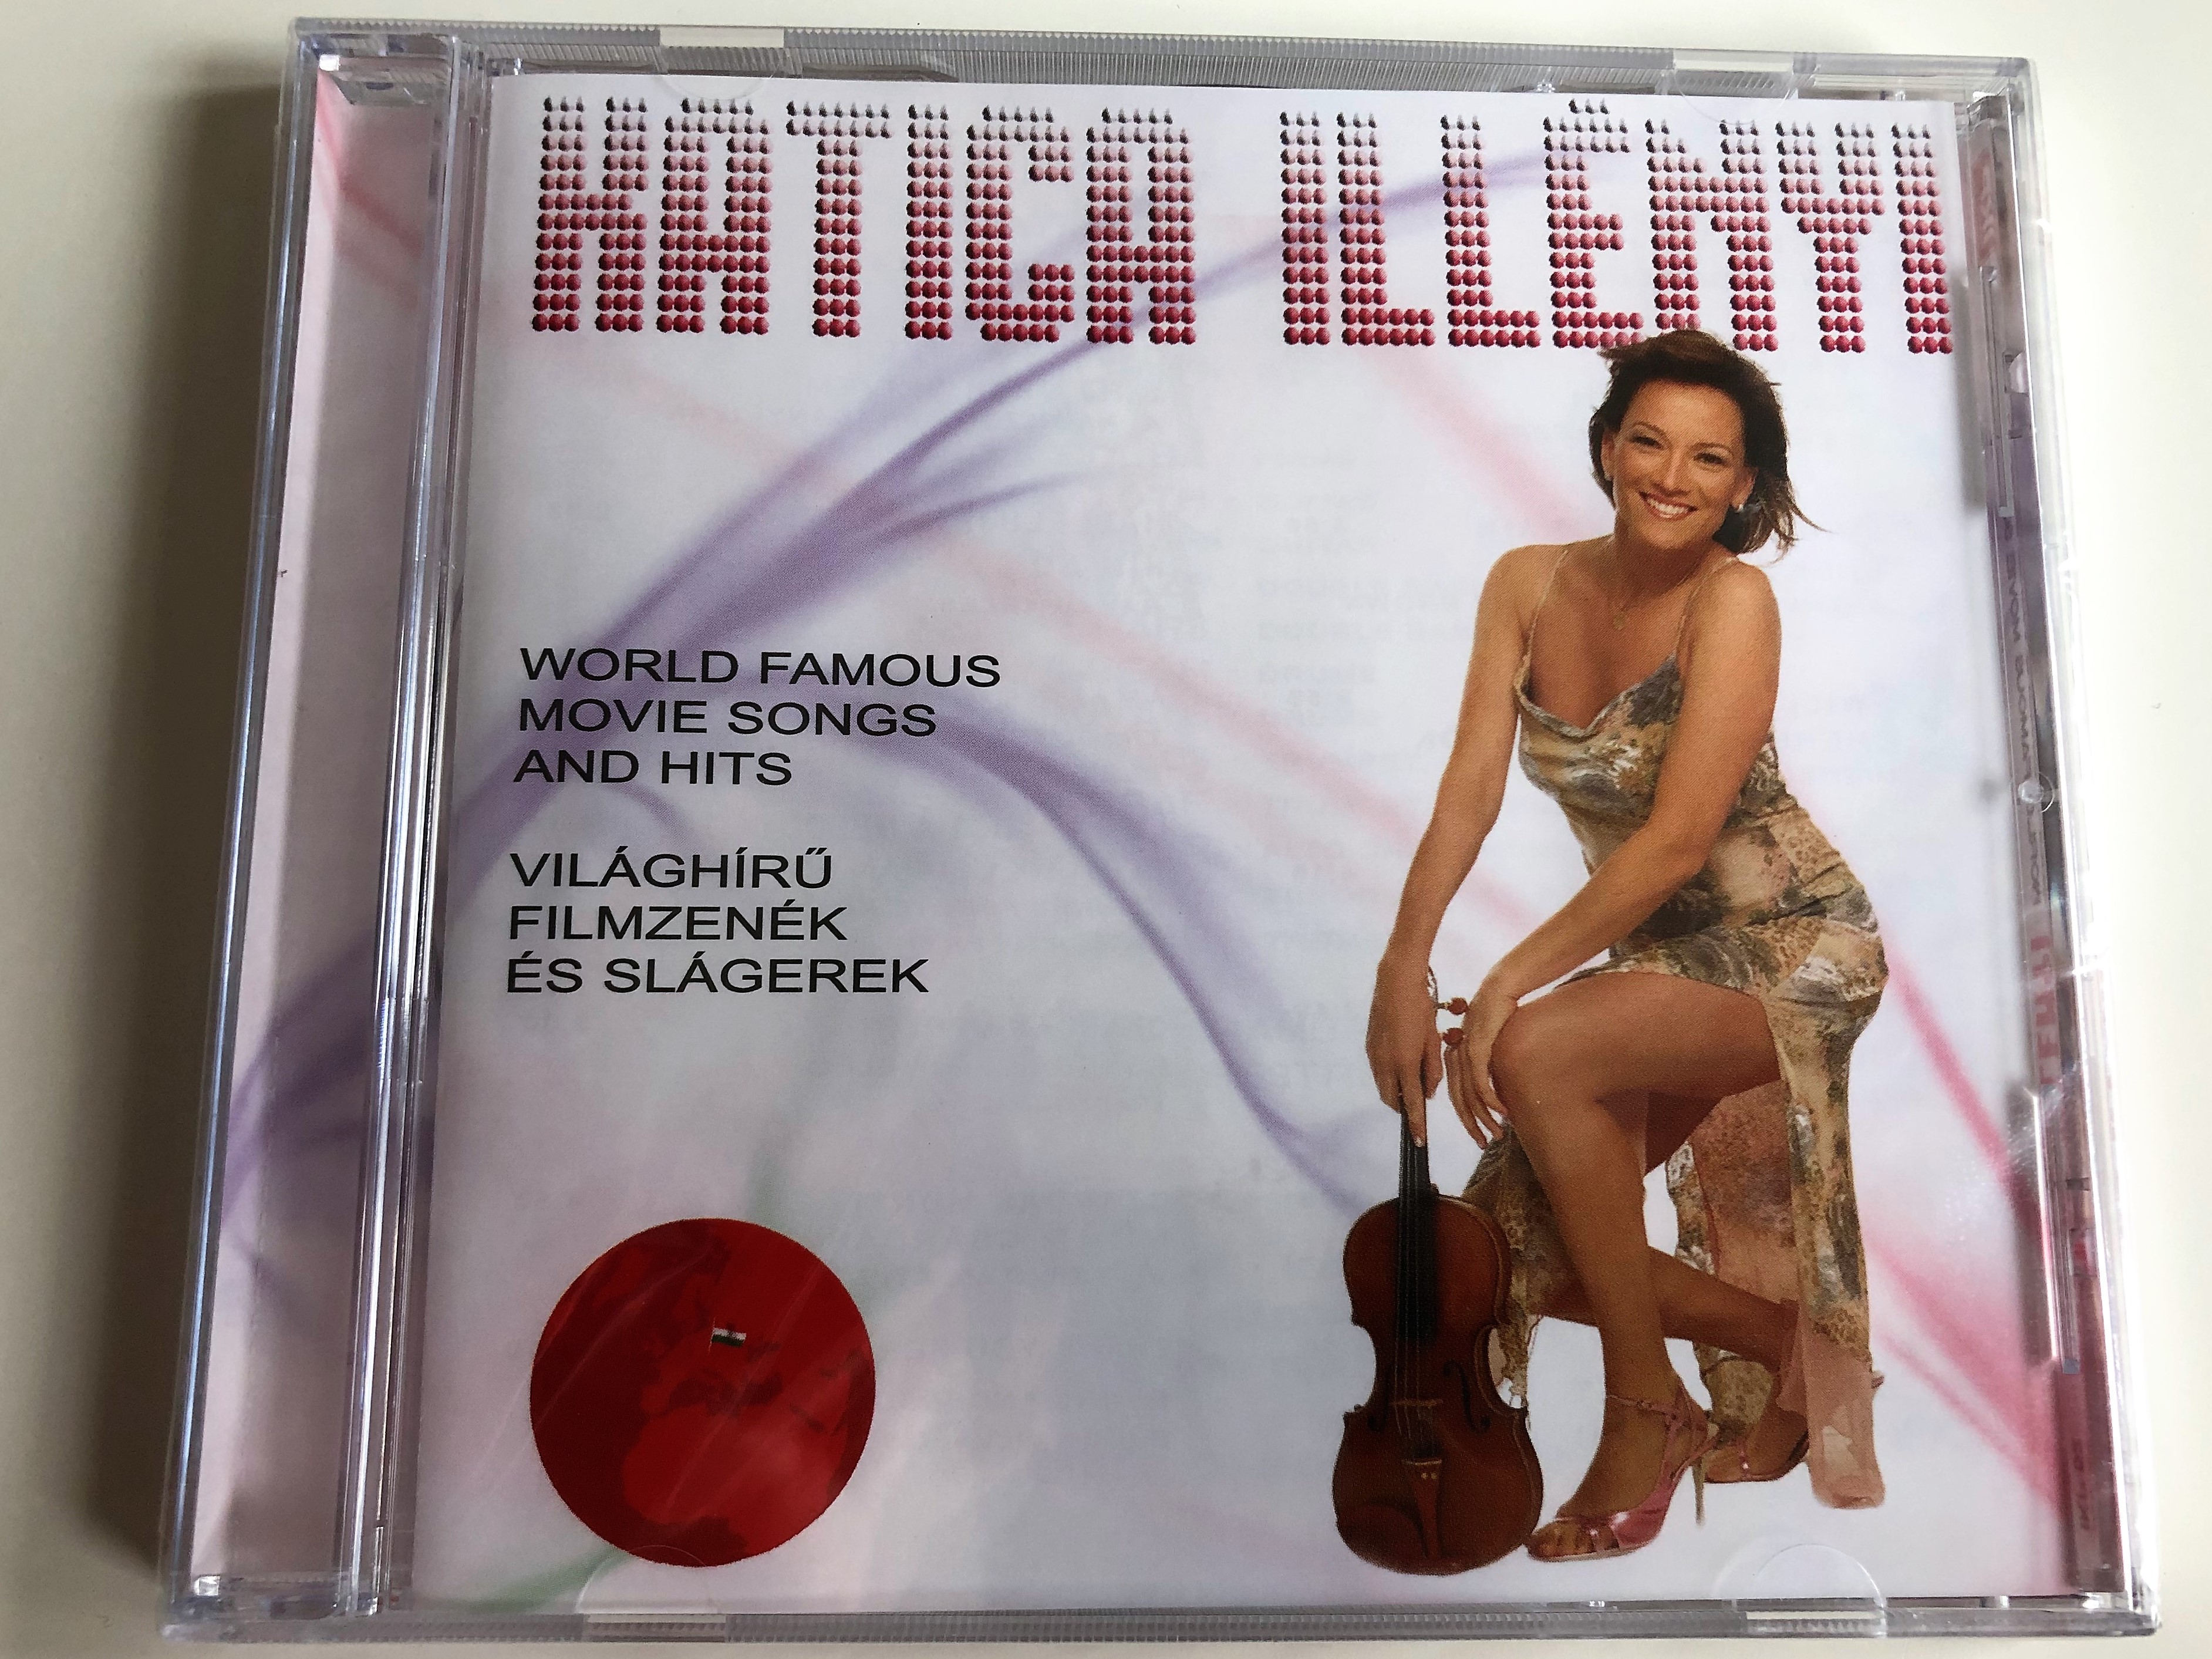 audio-cd-ill-nyi-katica-vil-gh-r-filmzen-k-s-sl-gerek-audio-cd-world-famous-movie-songs-and-hits-1-.jpg